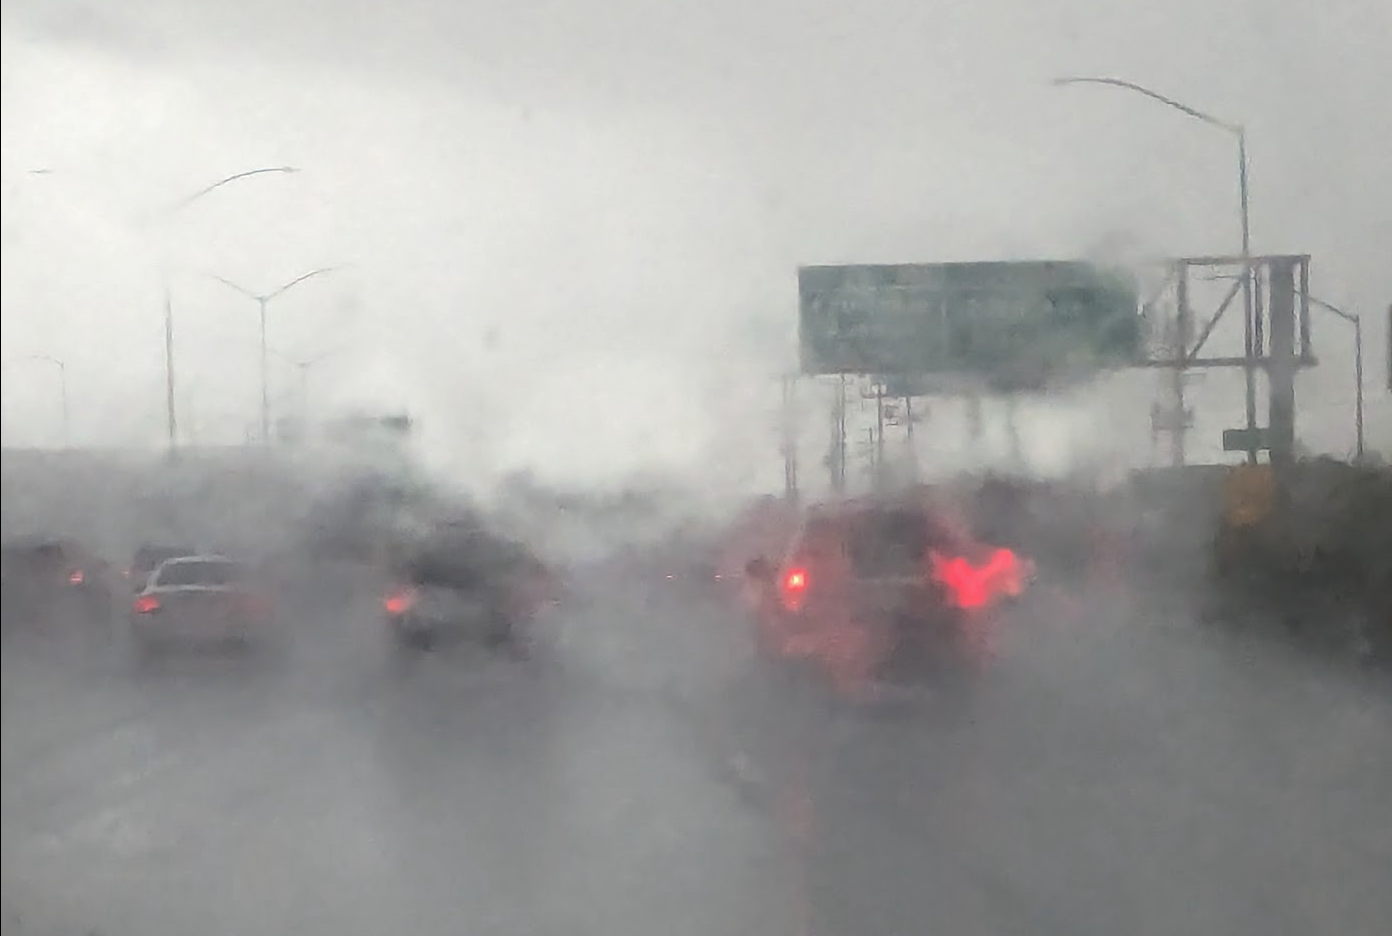 A wet California drive